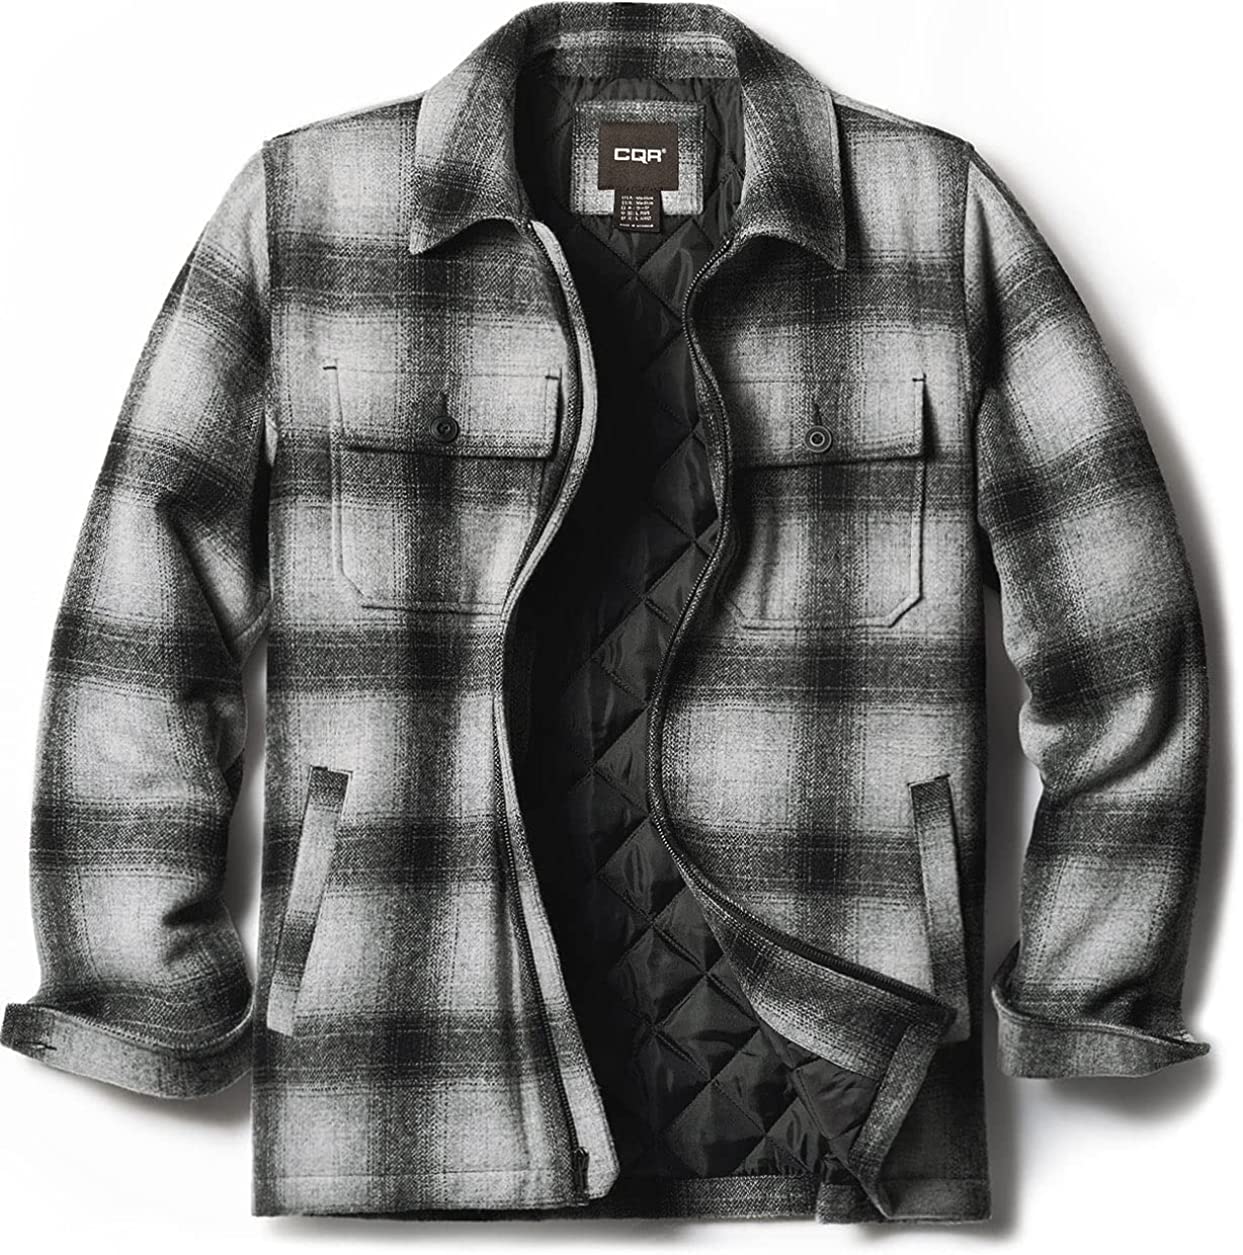 CQR Men's Plaid Flannel Shirt Jacket, Long Sleeve Soft Warm Wool